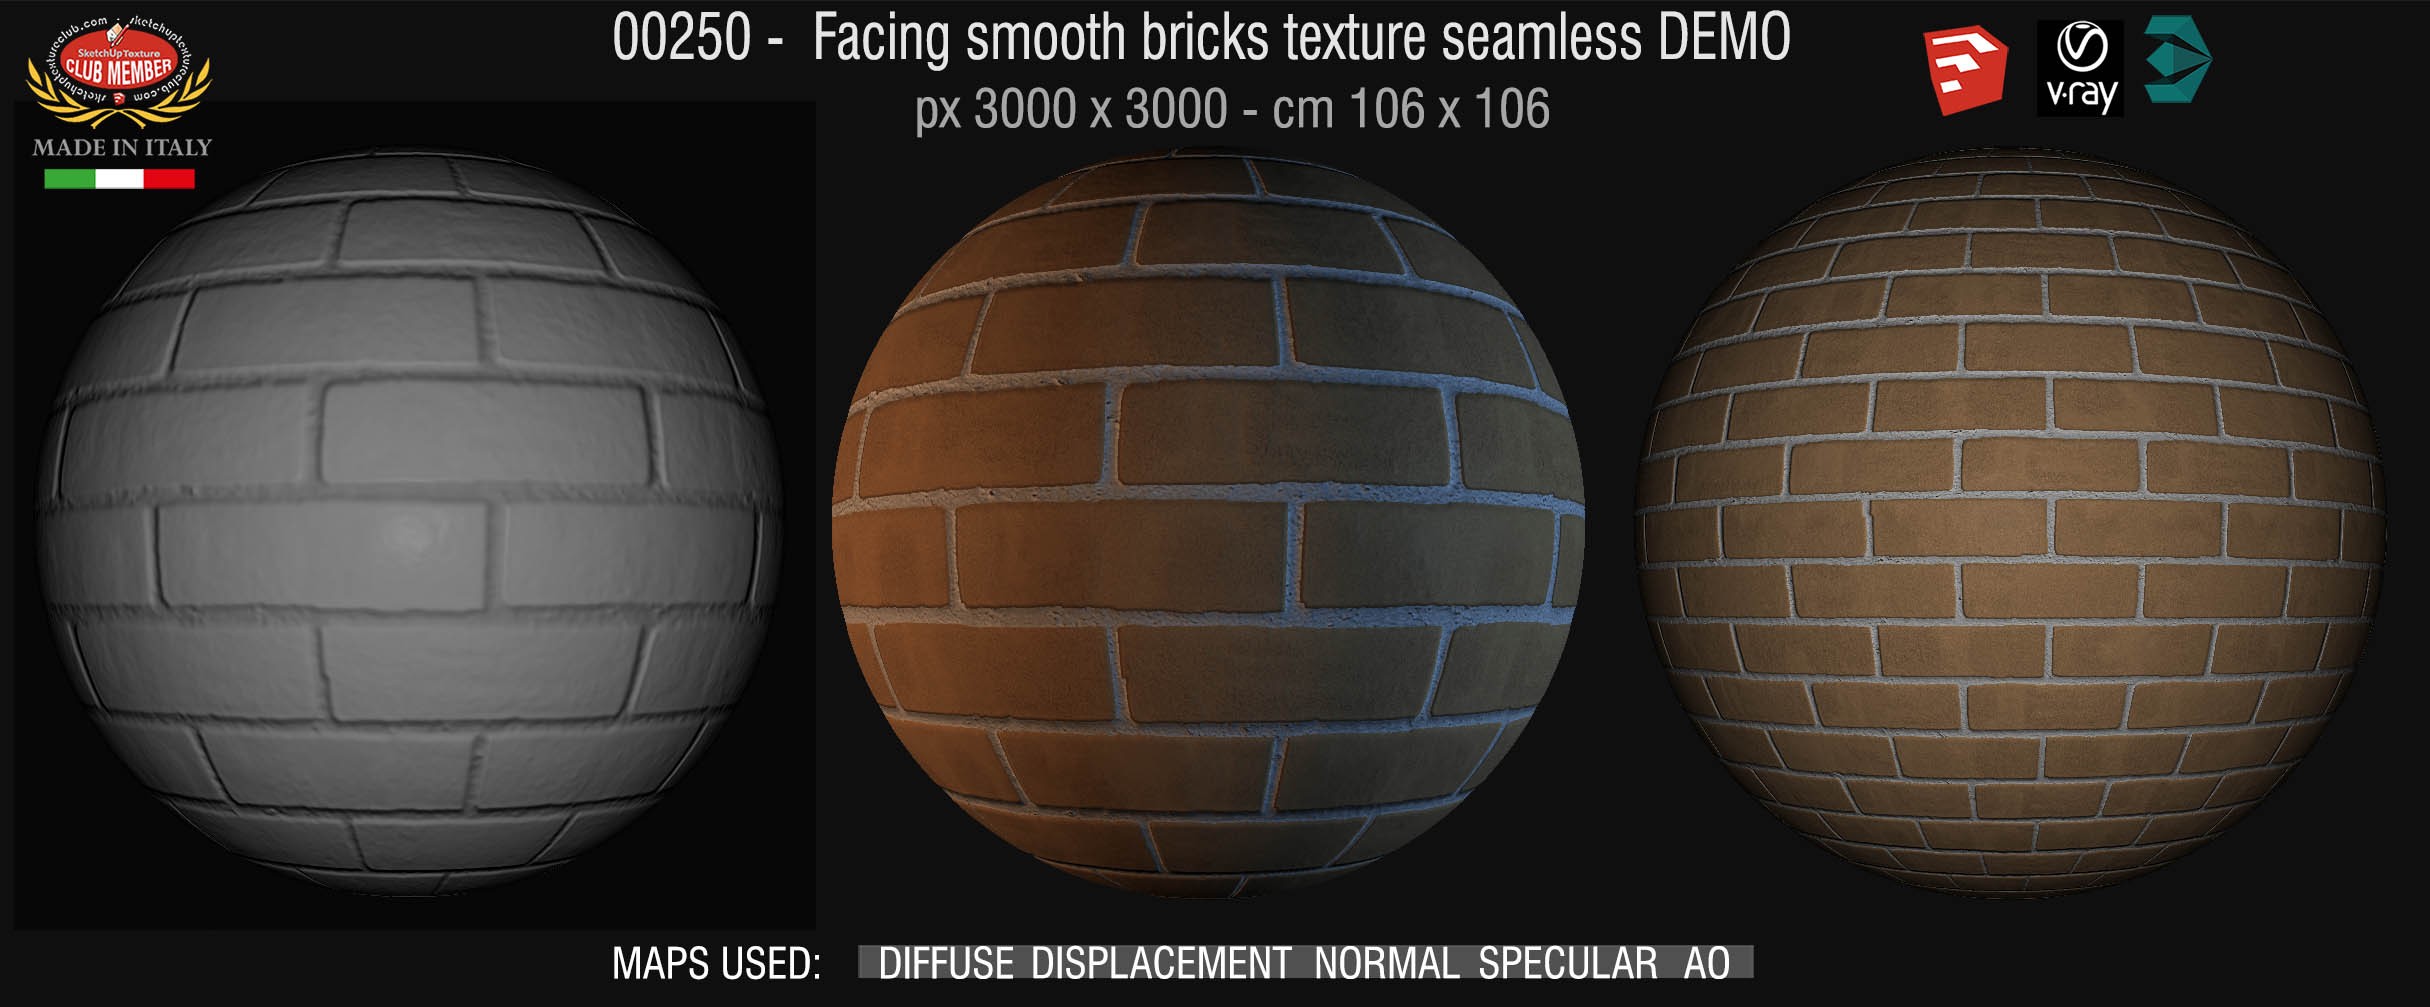 00250 Facing smooth bricks texture seamless + maps DEMO